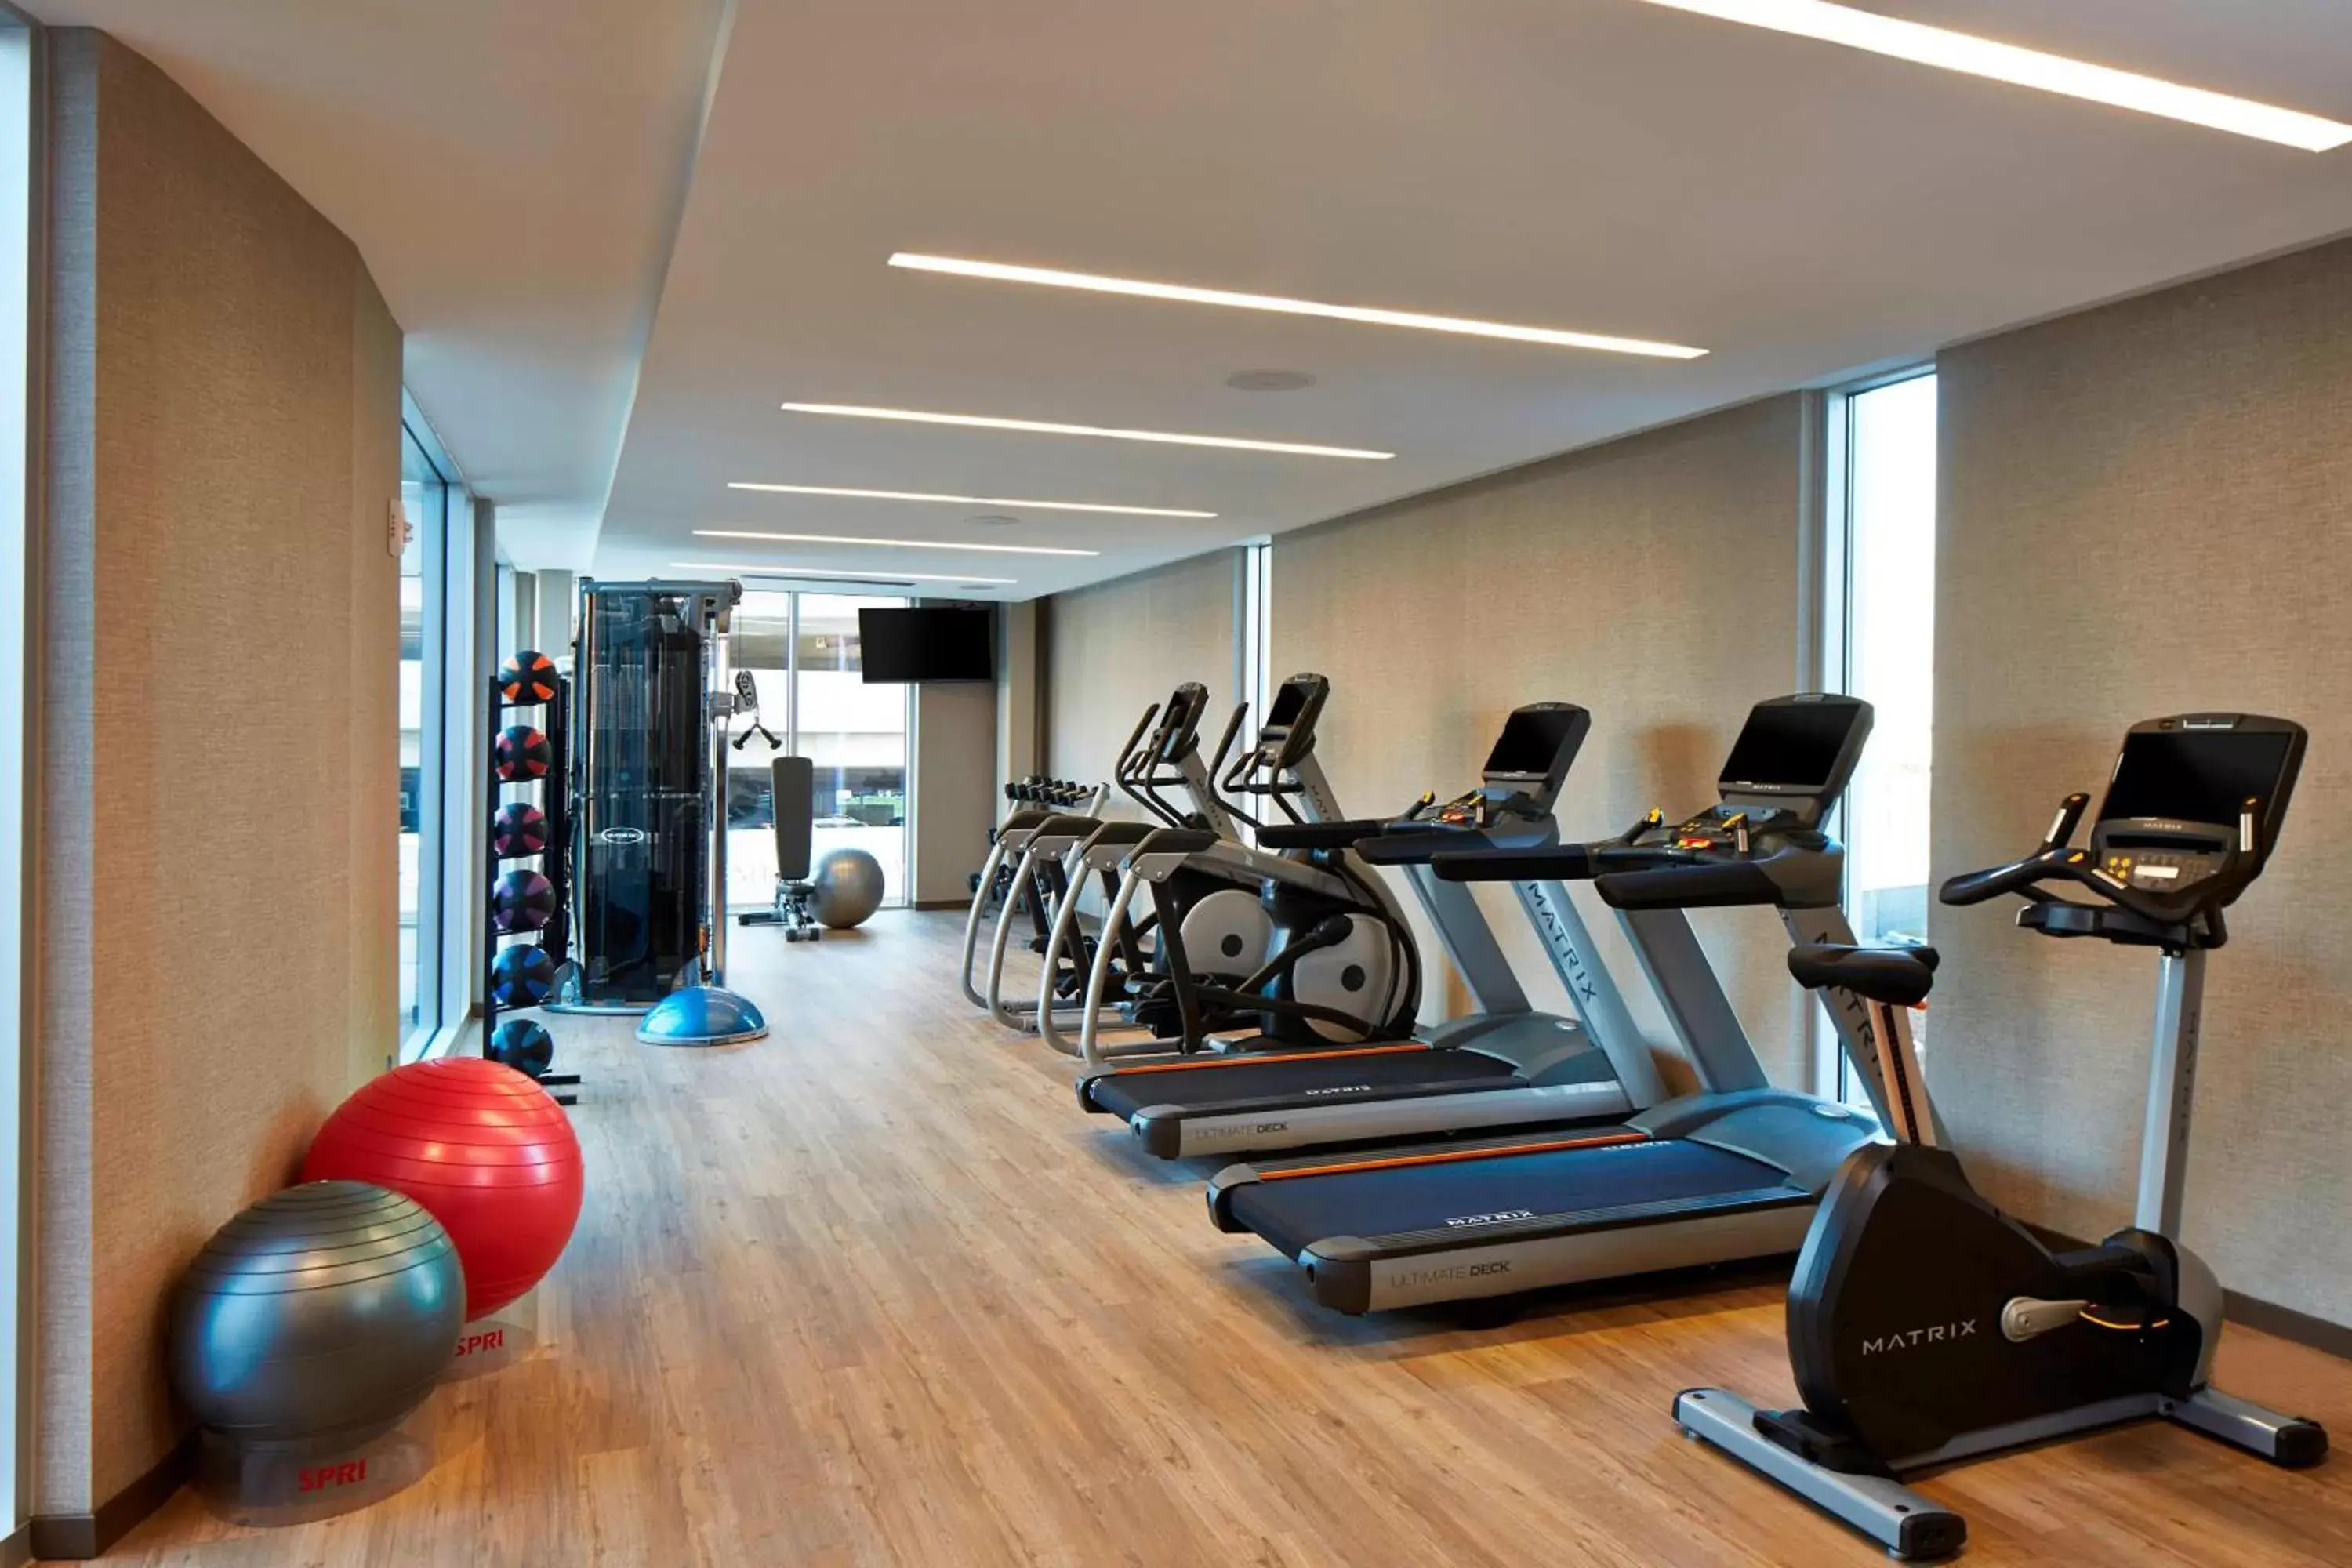 Fitness centre/facilities, Fitness Center/Facilities in AC Hotel Columbus Dublin